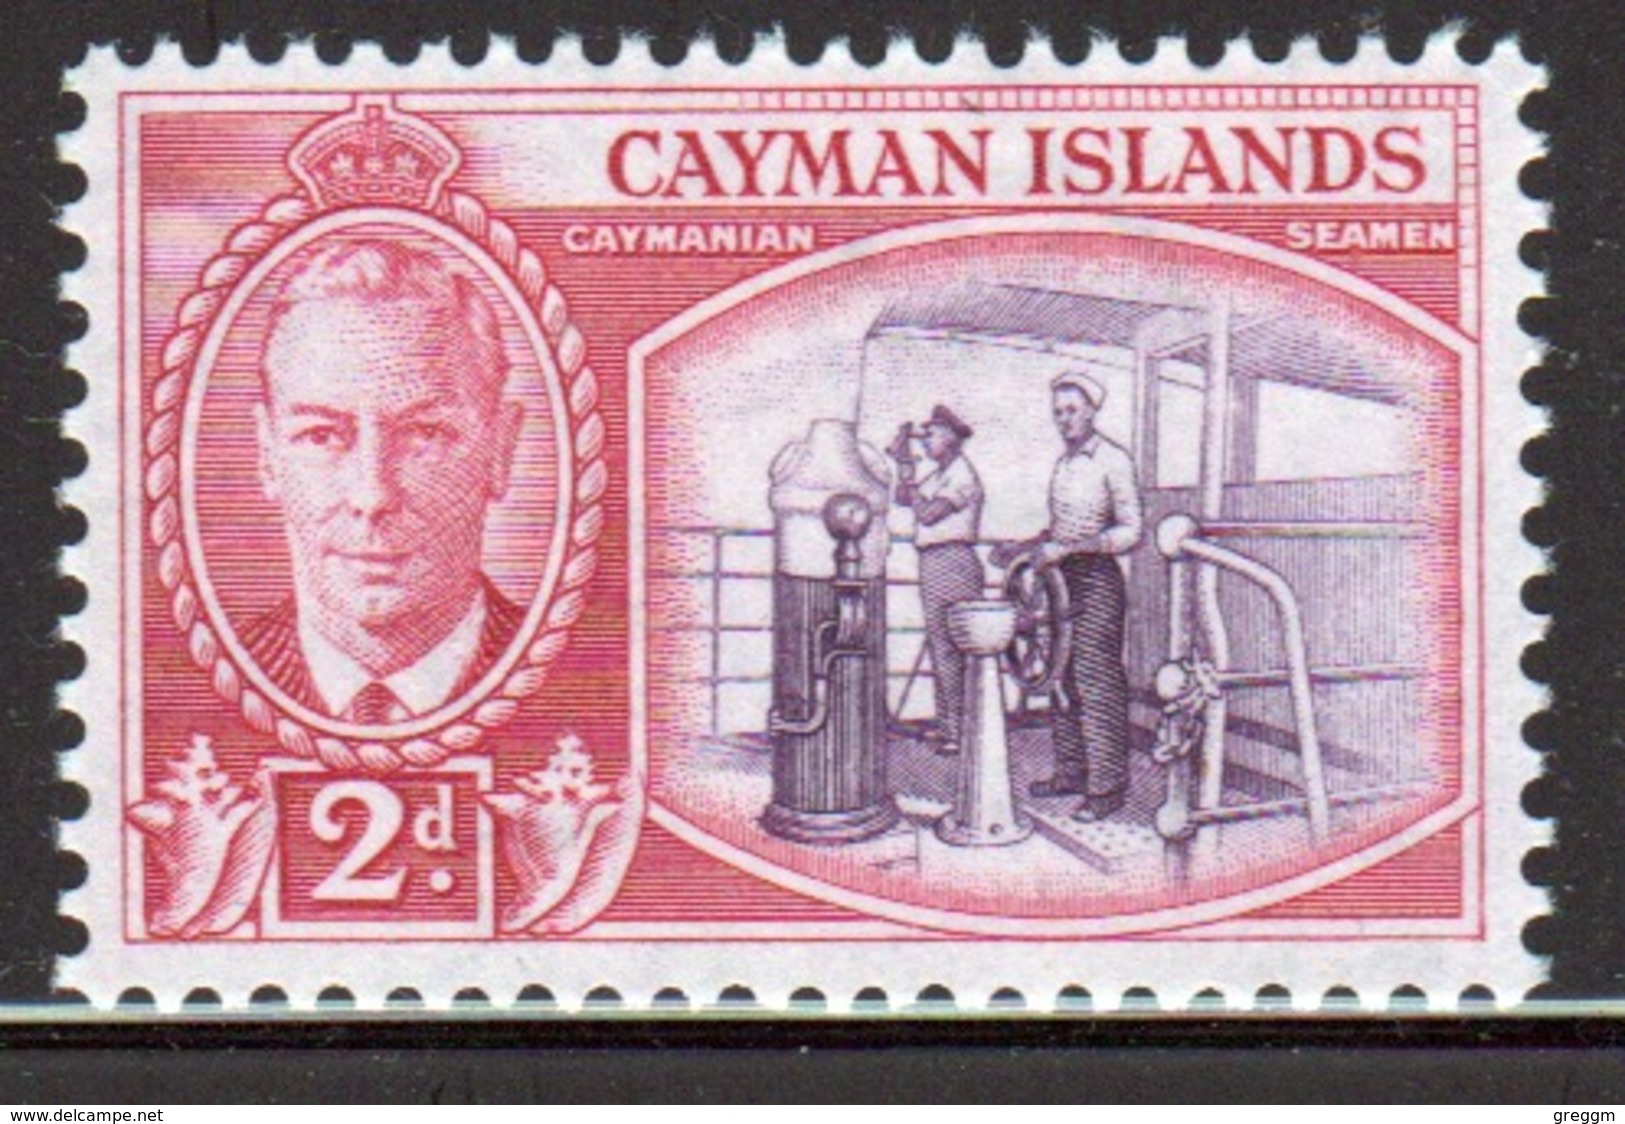 Cayman Islands 1950 George VI 2d Reddish Violet And Rose Carmine Single Definitive Stamp. - Cayman Islands